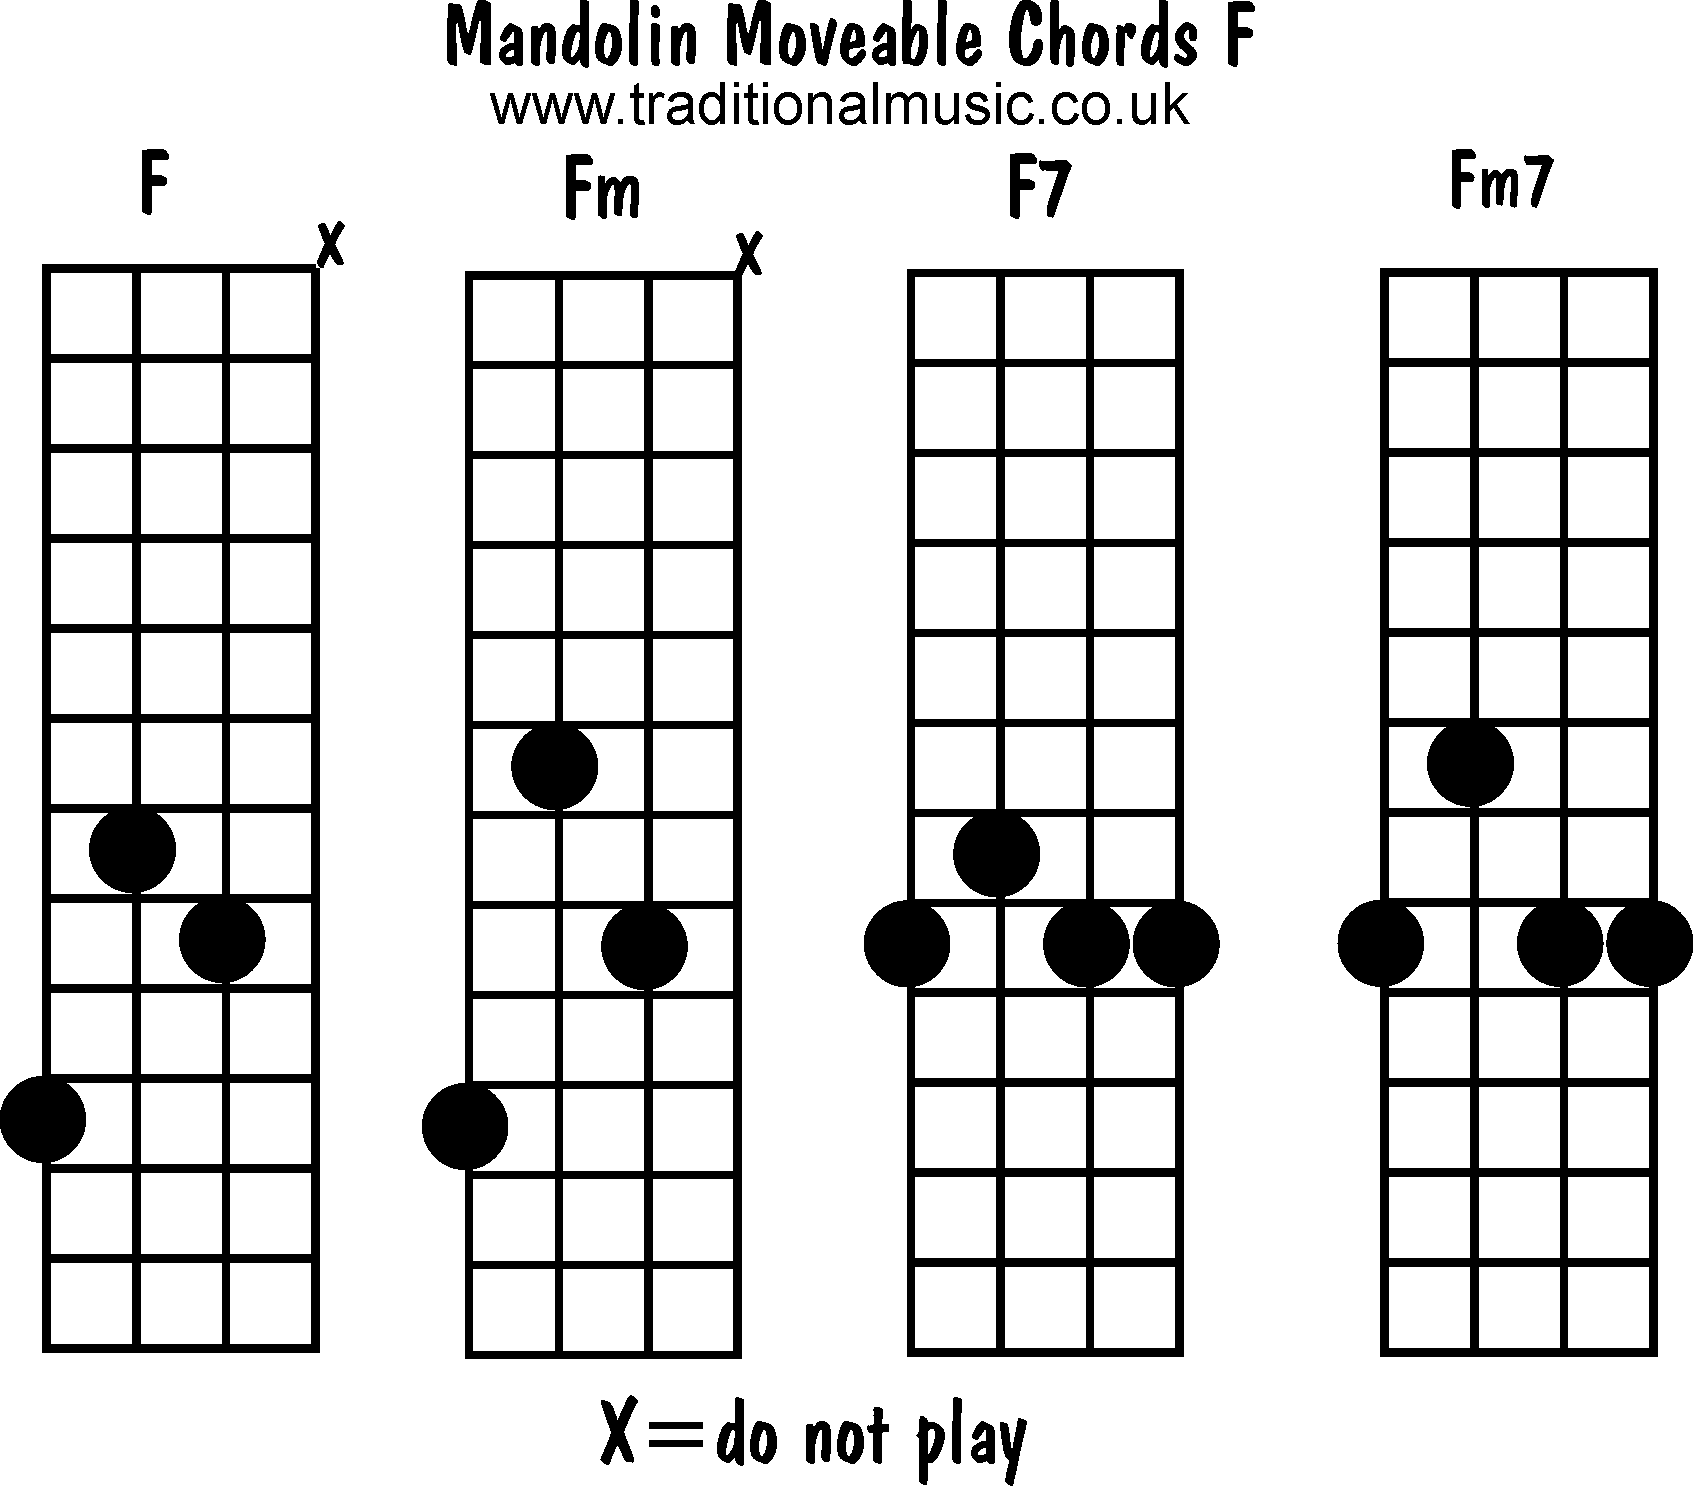 Moveable mandolin chords: F, Fm, F7, Fm7